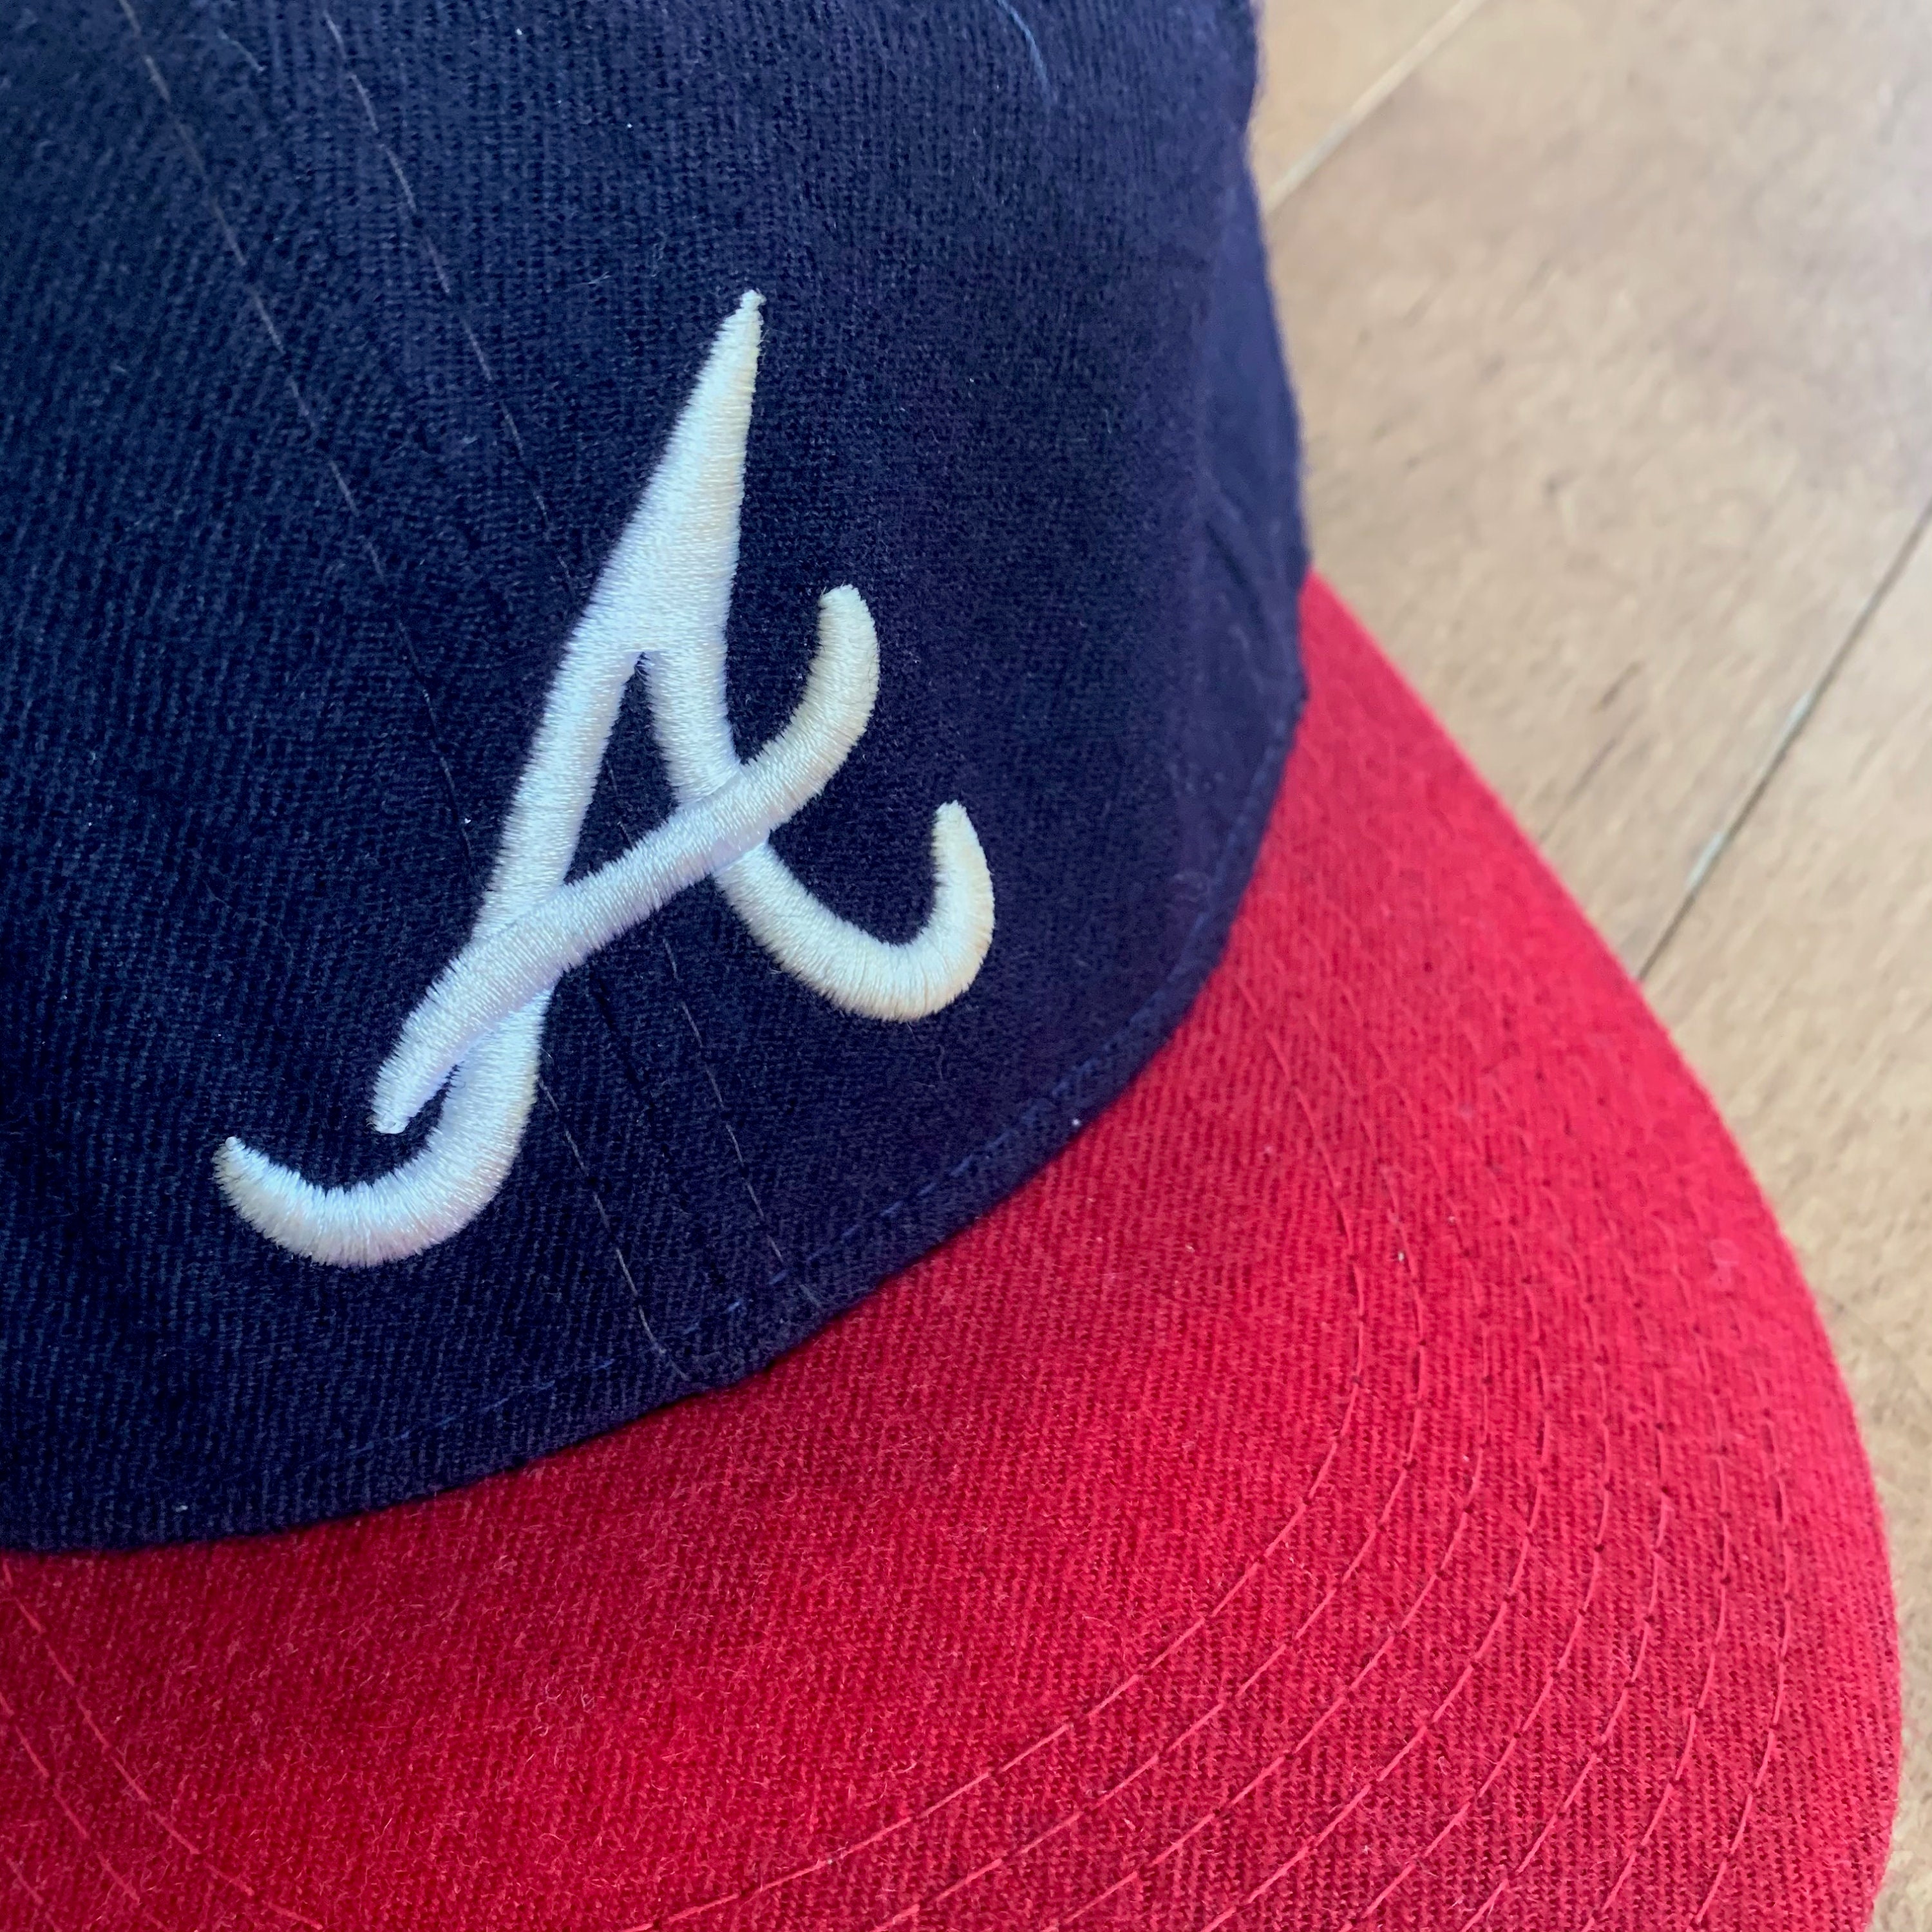 Vintage Atlanta Braves Hat